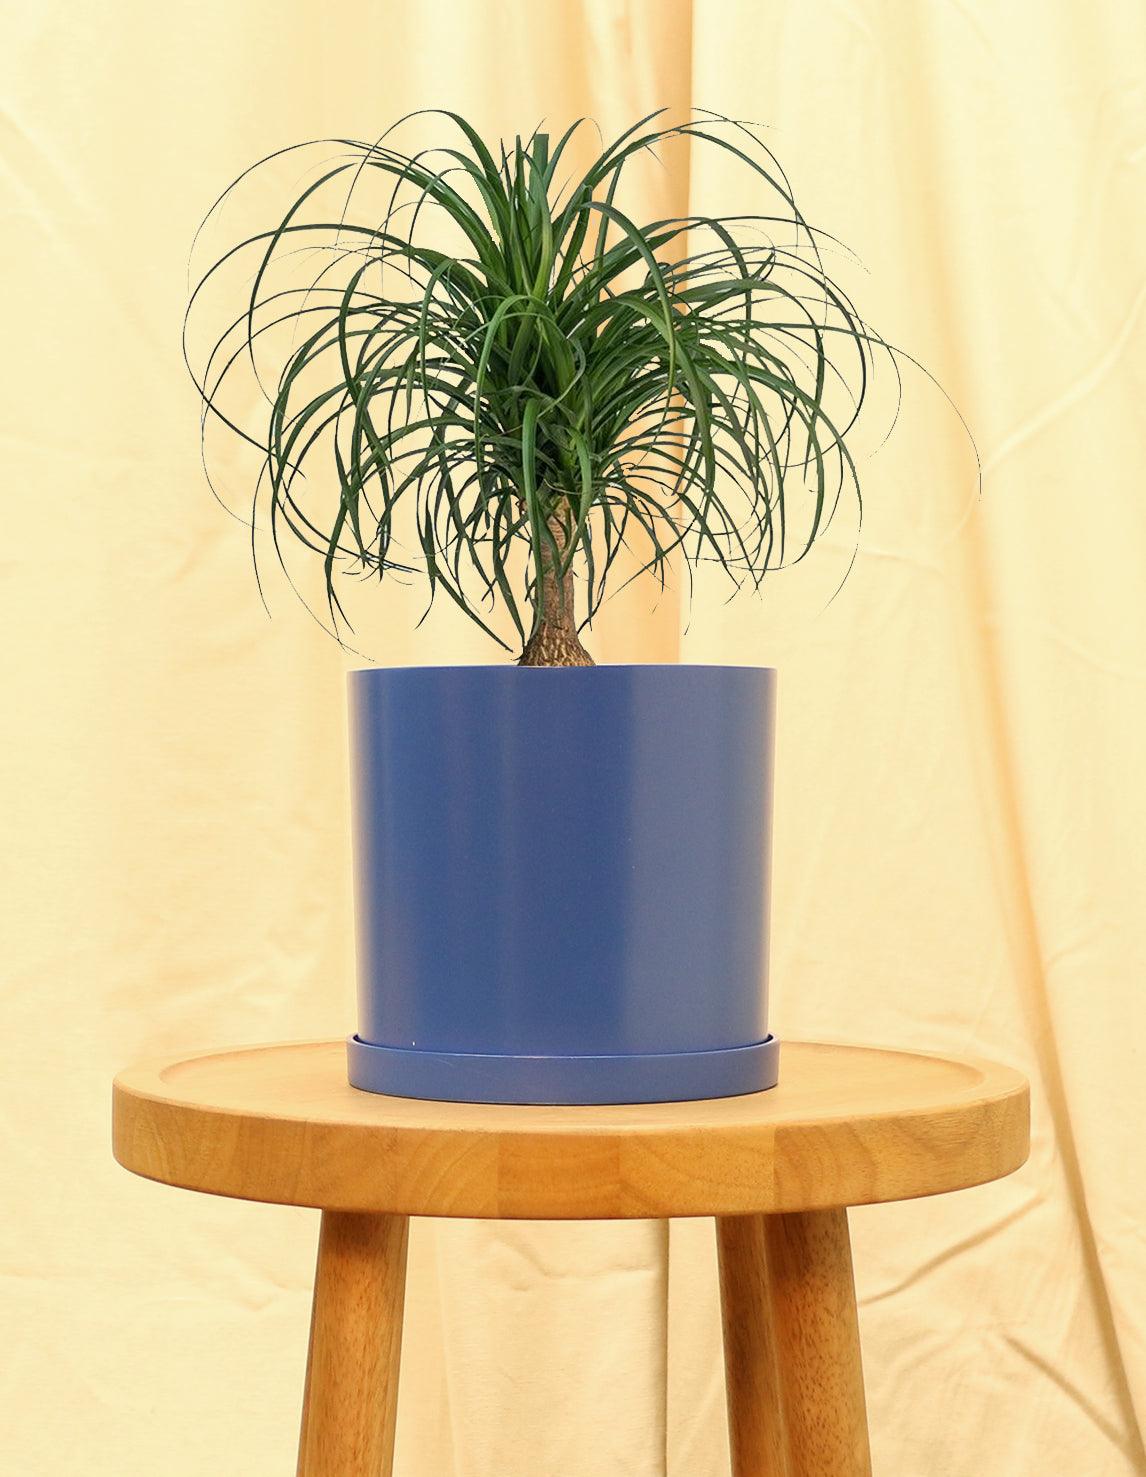 Medium Ponytail Palm Plant in blue pot.